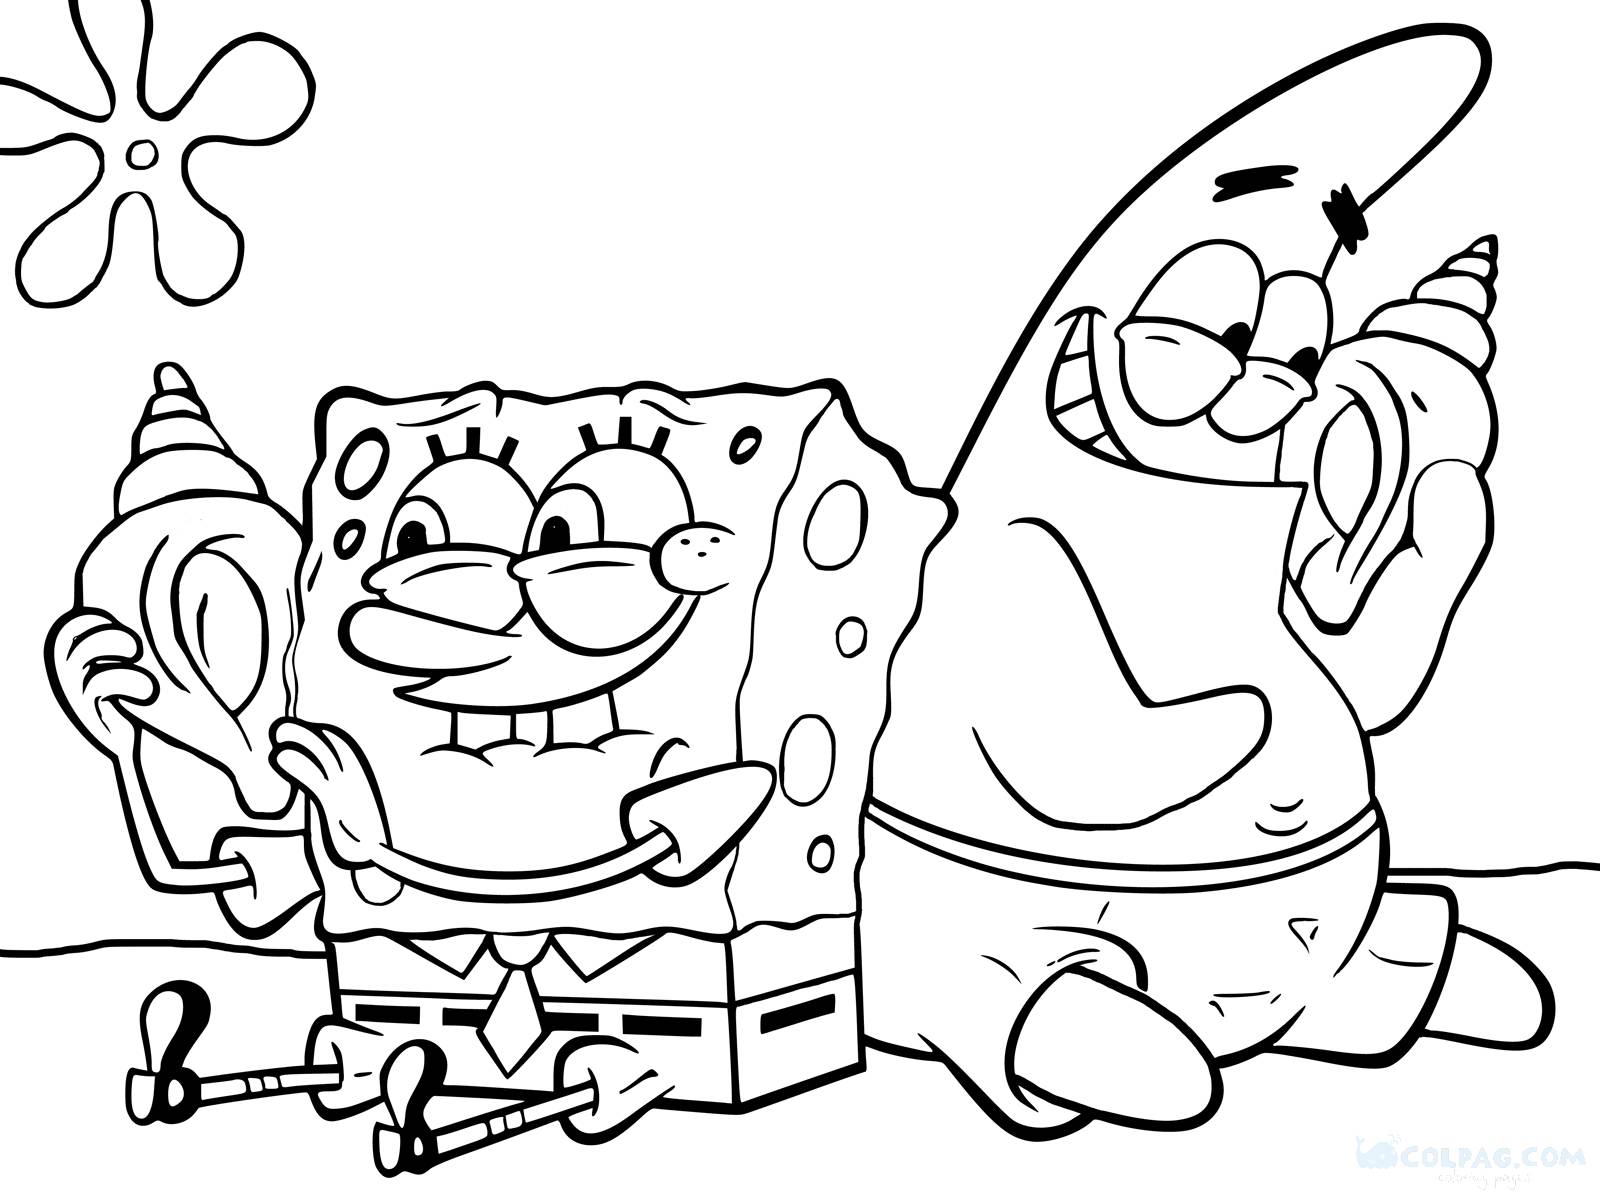 sponge-bob-coloring-page-colpag-com-34